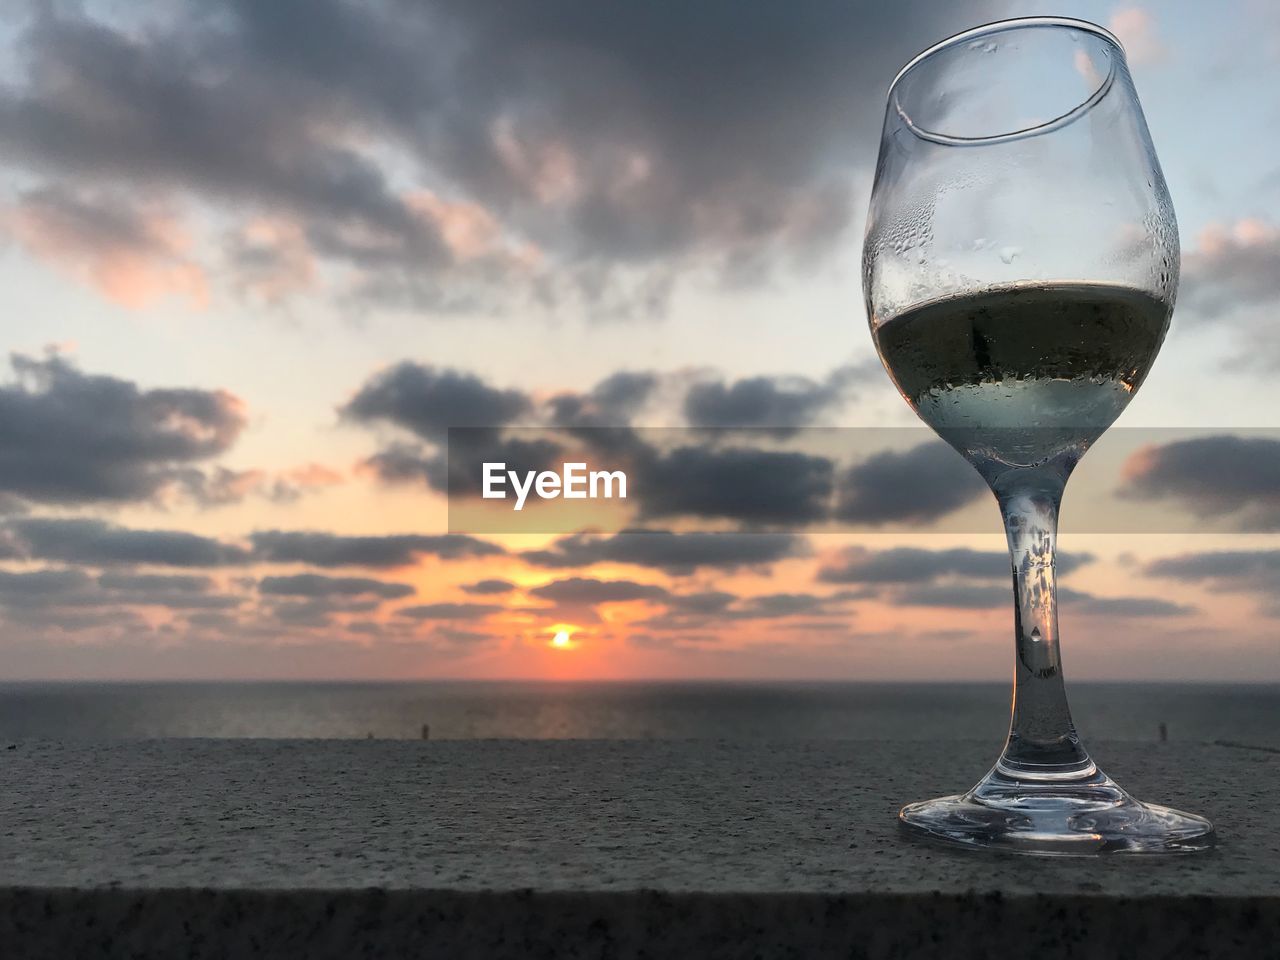 VIEW OF WINE GLASS ON BEACH